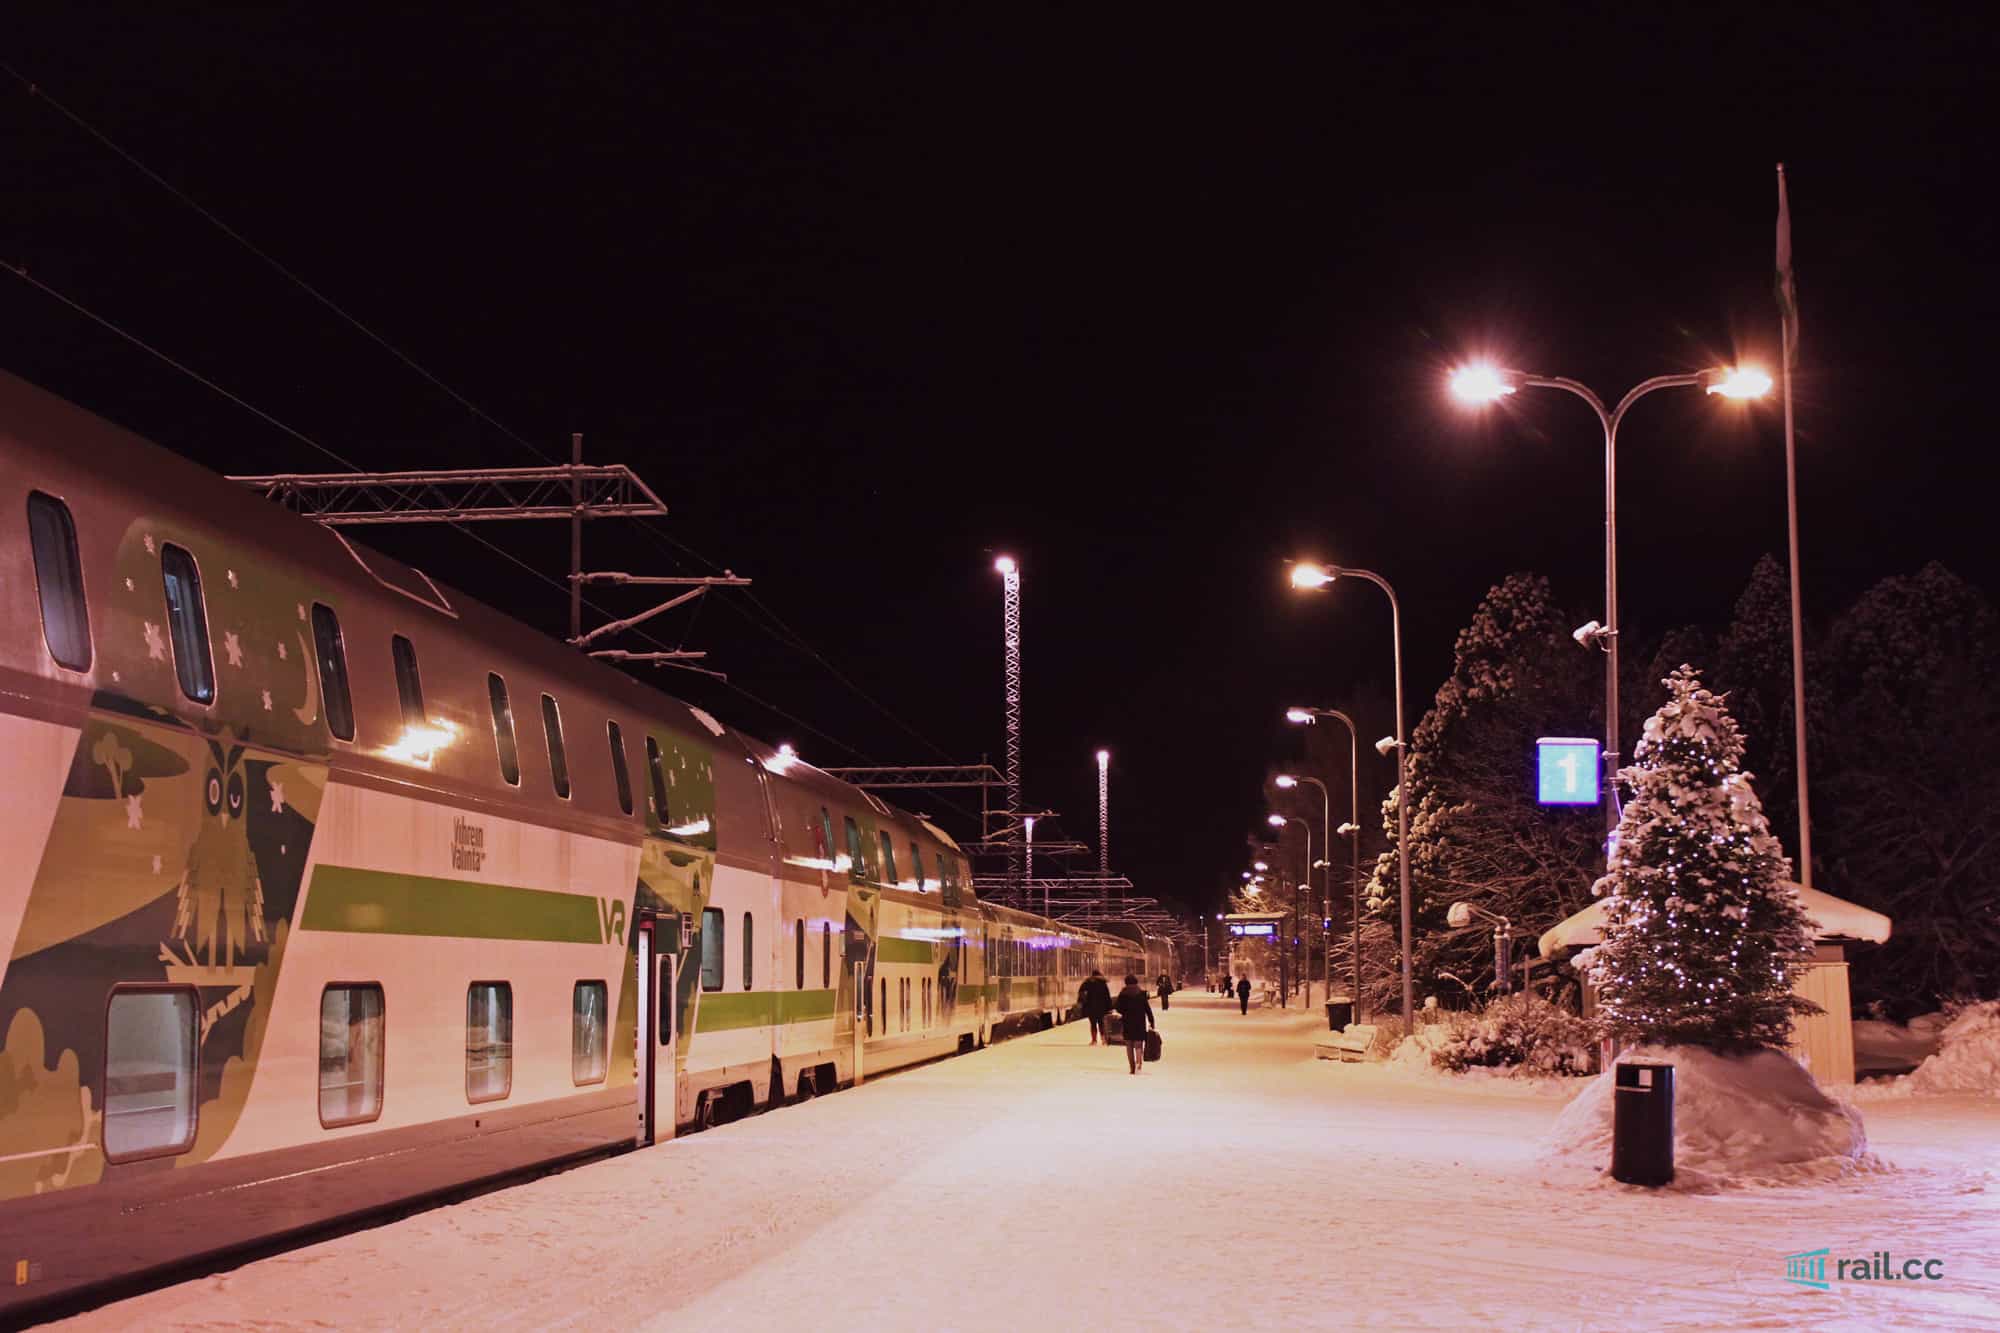 Night train from Rovaniemi to Turku Port at the railway station of Rovaniemi